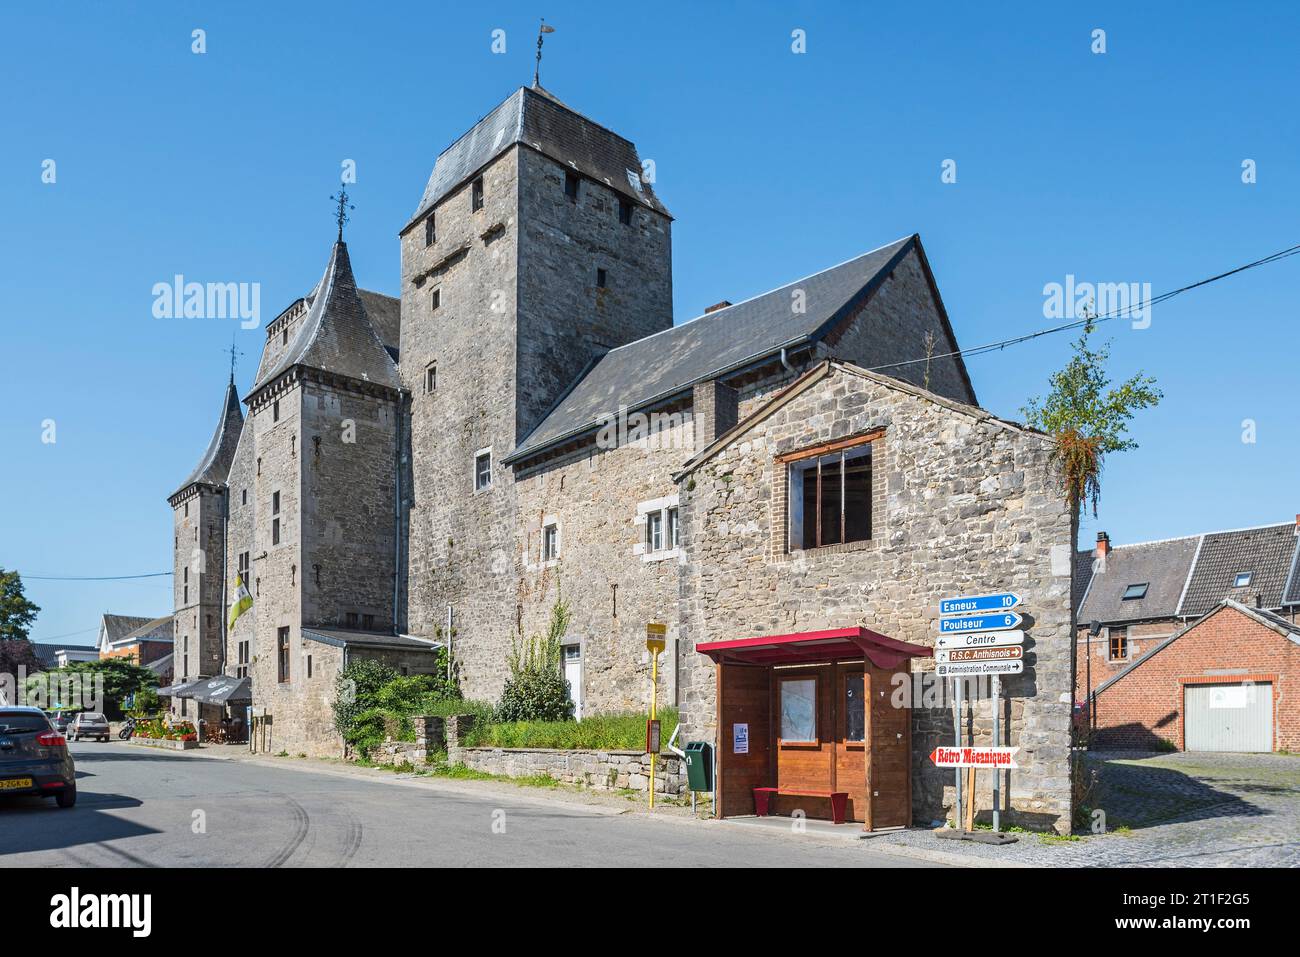 Avouerie d'Anthisnes, 12th century advocatus' donjon / medieval keep in the village Anthisnes, province of Liège, Belgian Ardennes, Wallonia, Belgium Stock Photo